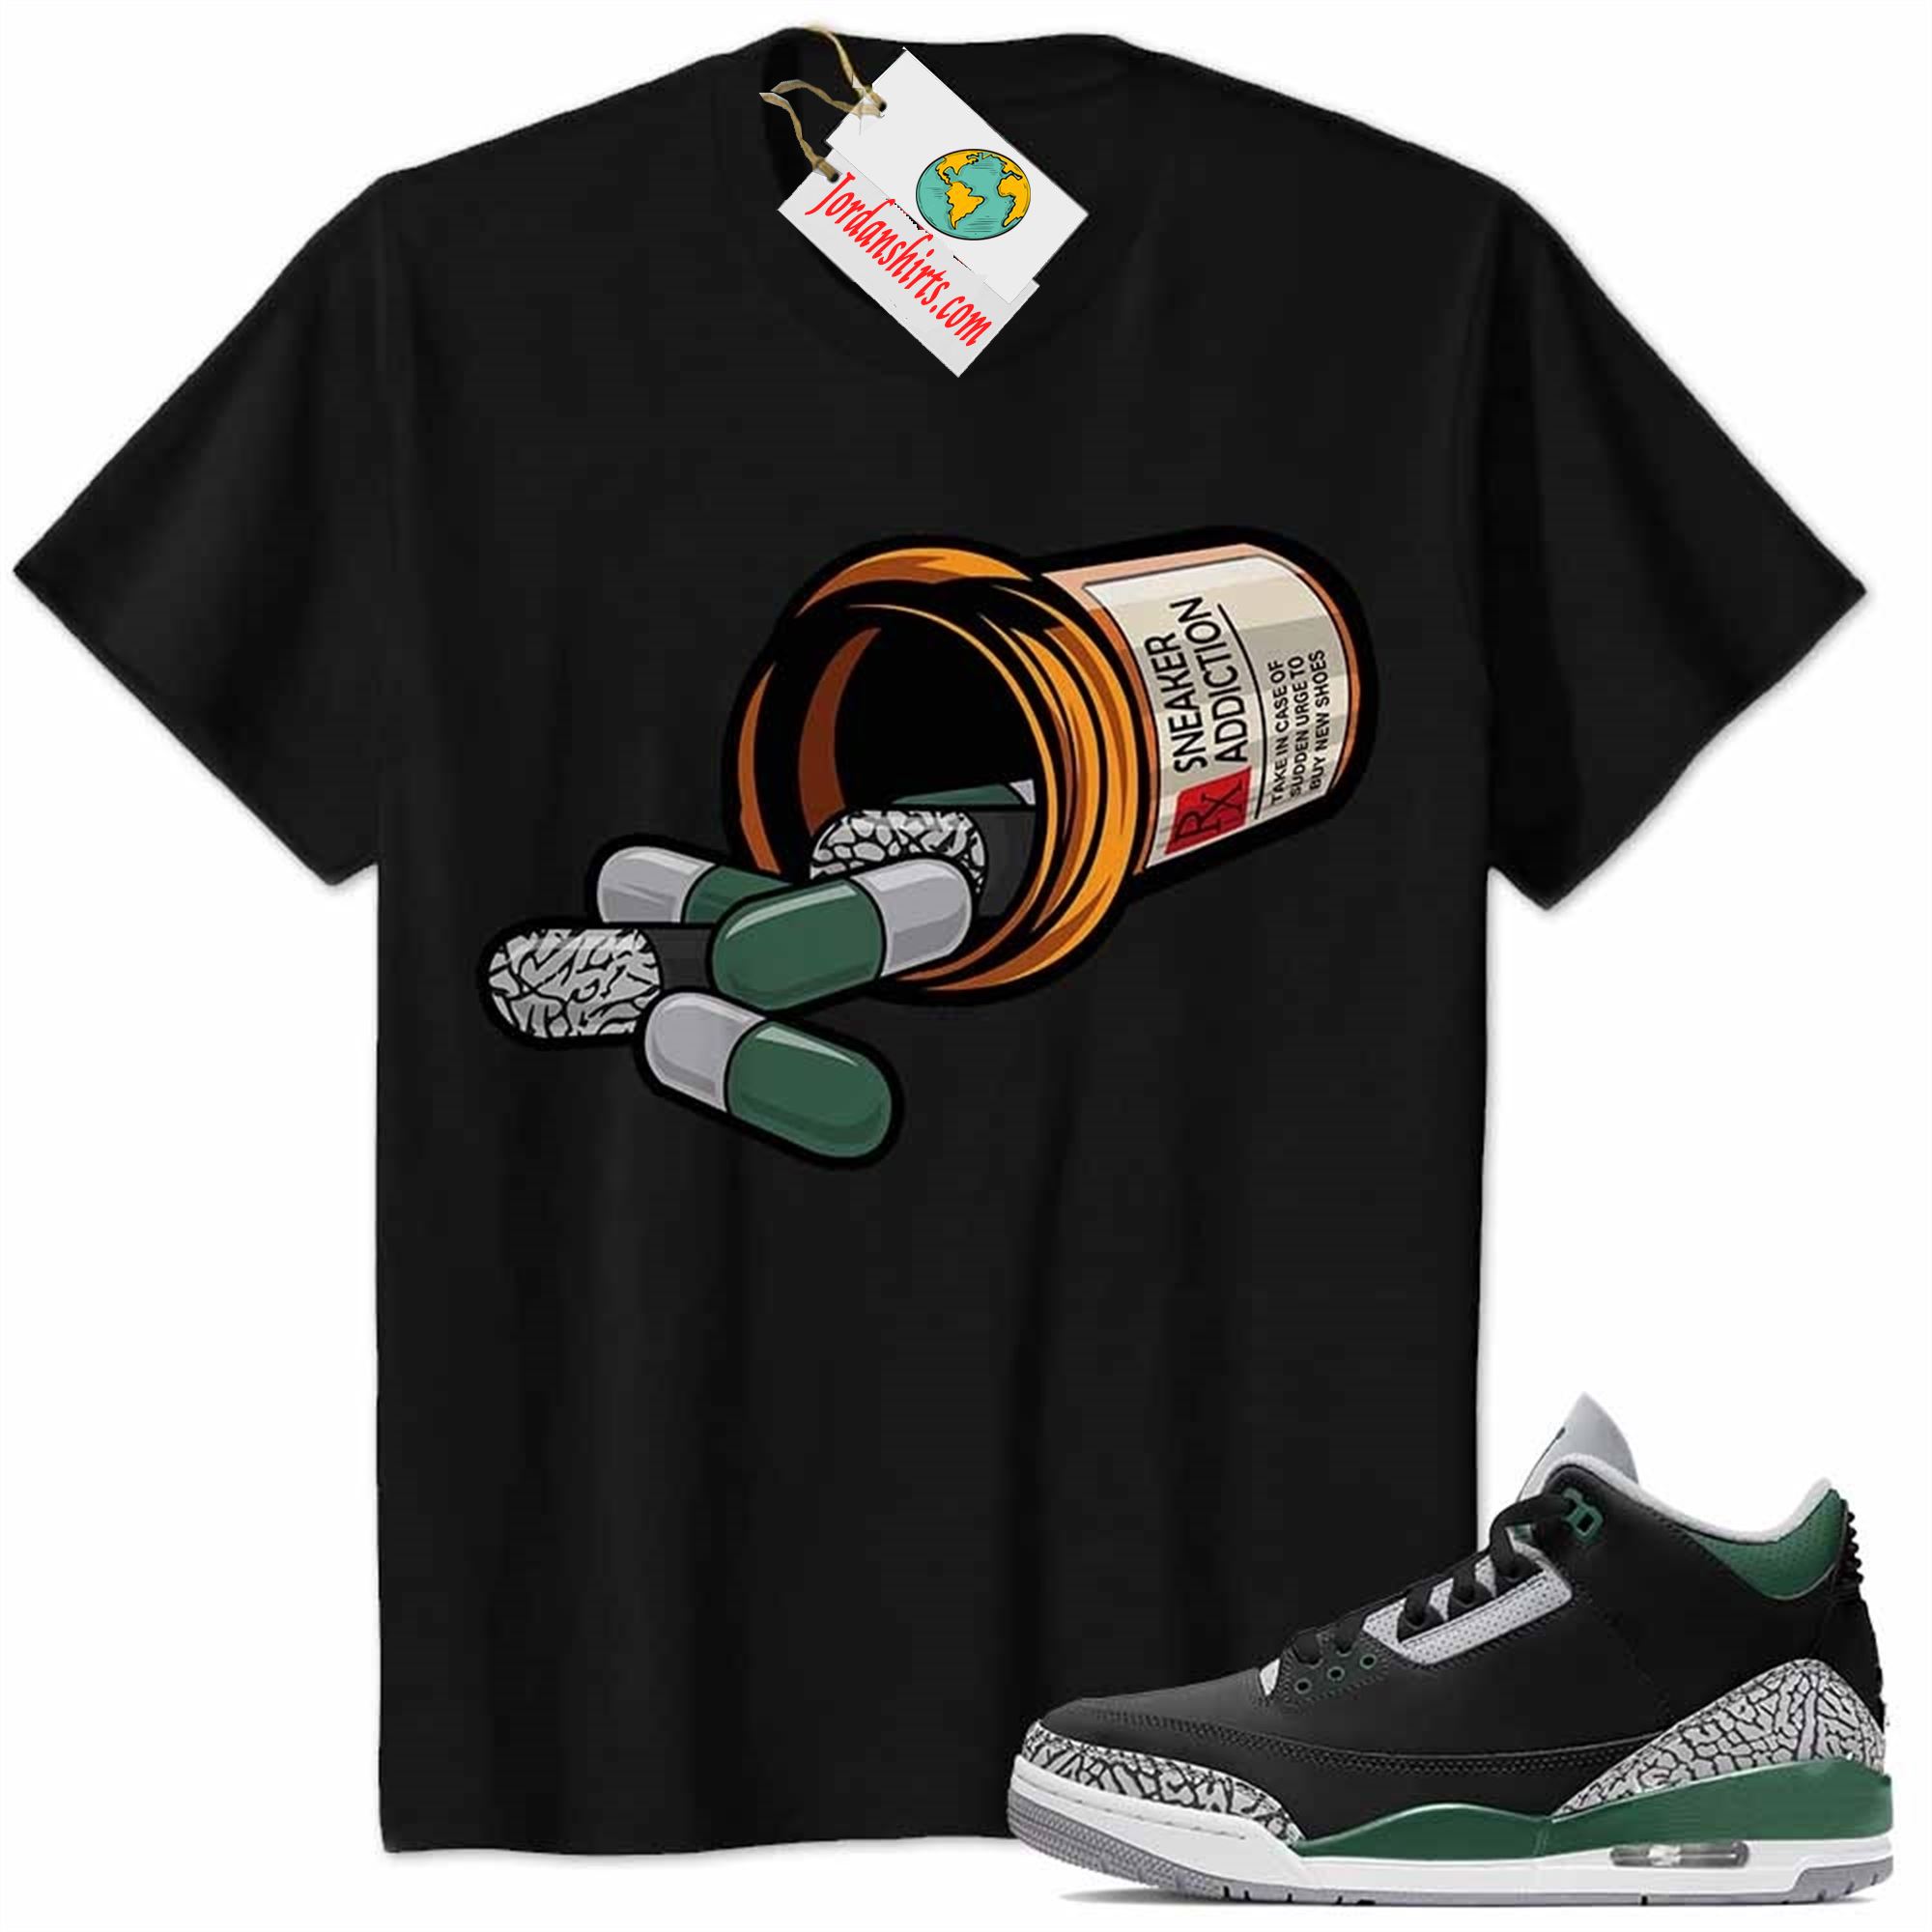 Jordan 3 Shirt, Rx Drugs Pill Bottle Sneaker Addiction Black Air Jordan 3 Pine Green 3s Full Size Up To 5xl